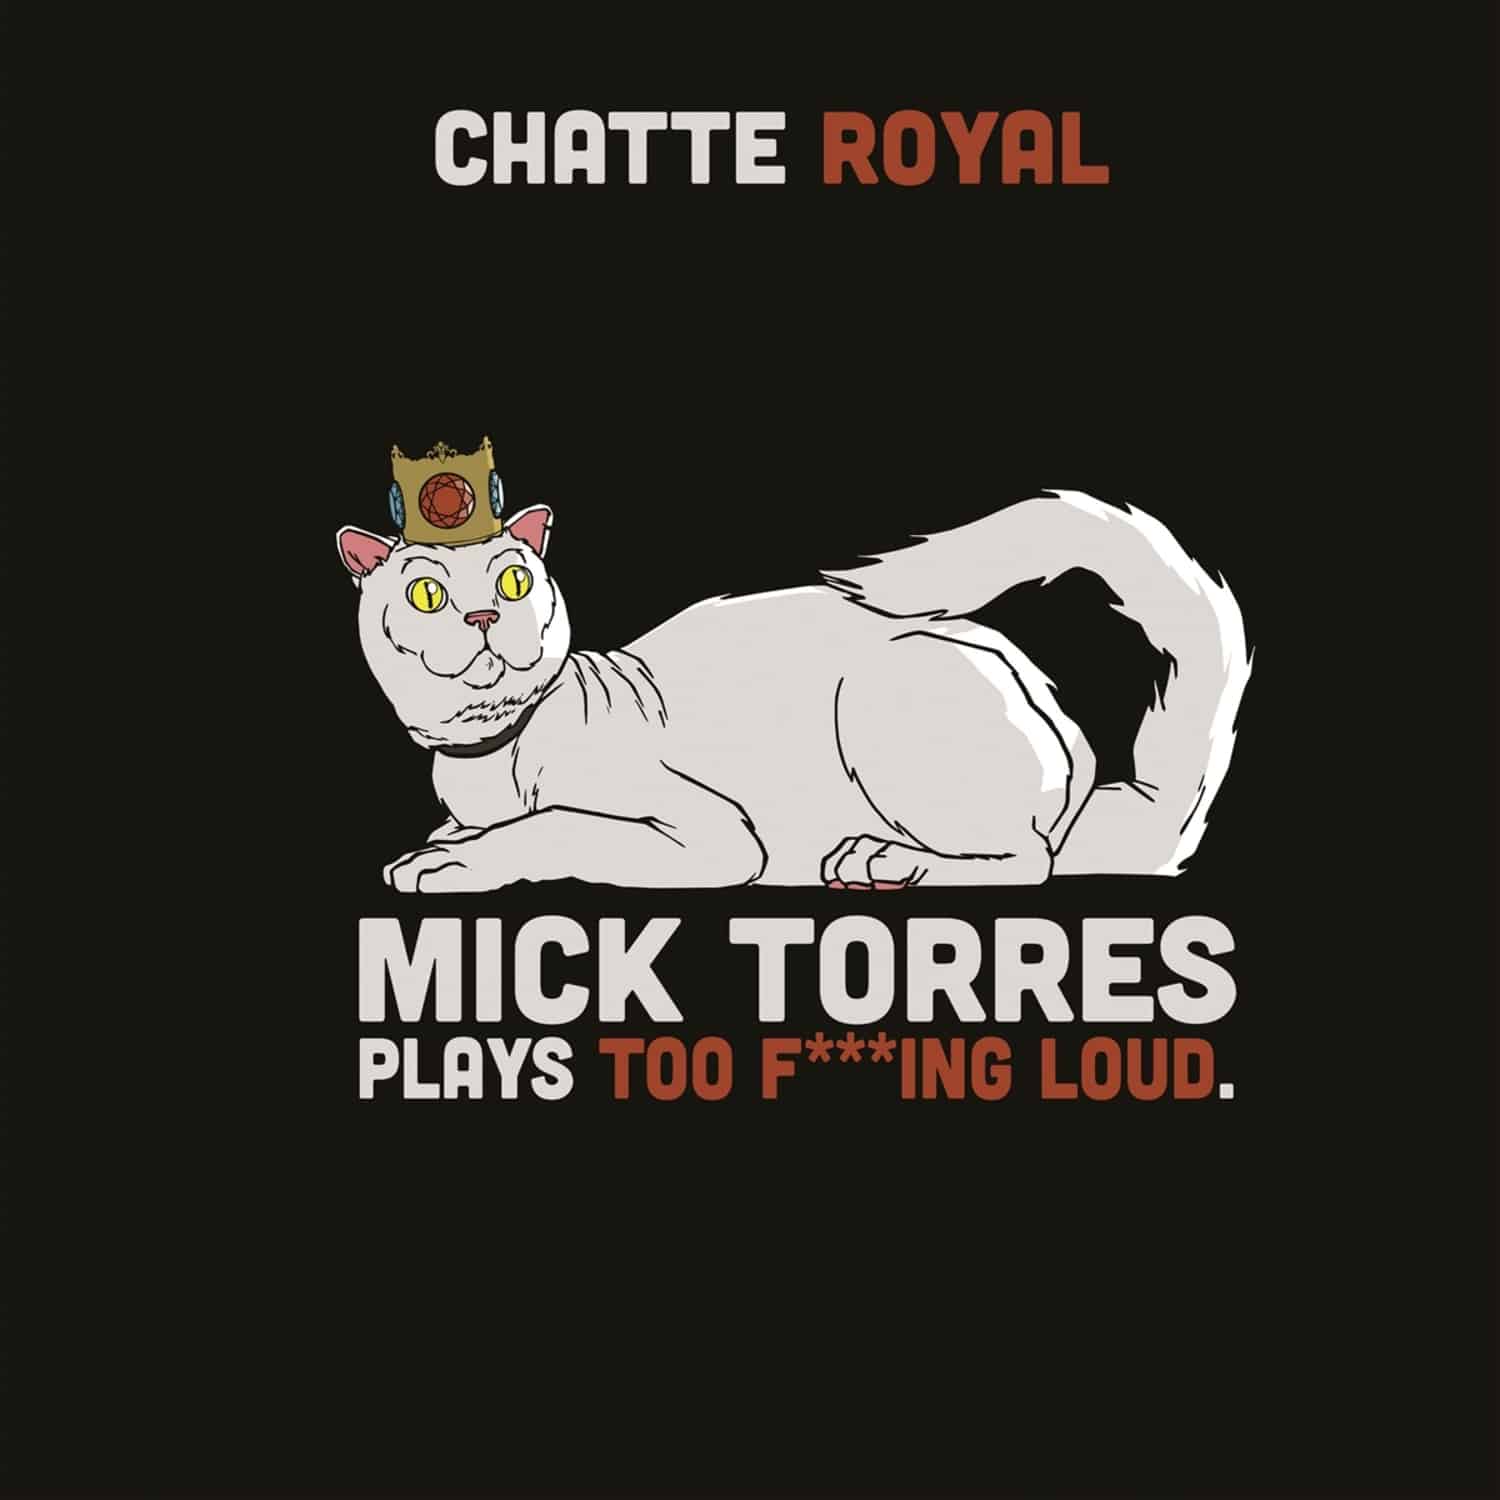 Chatte Royal - MICK TORRES PLAYS TOO F***ING LOUD 